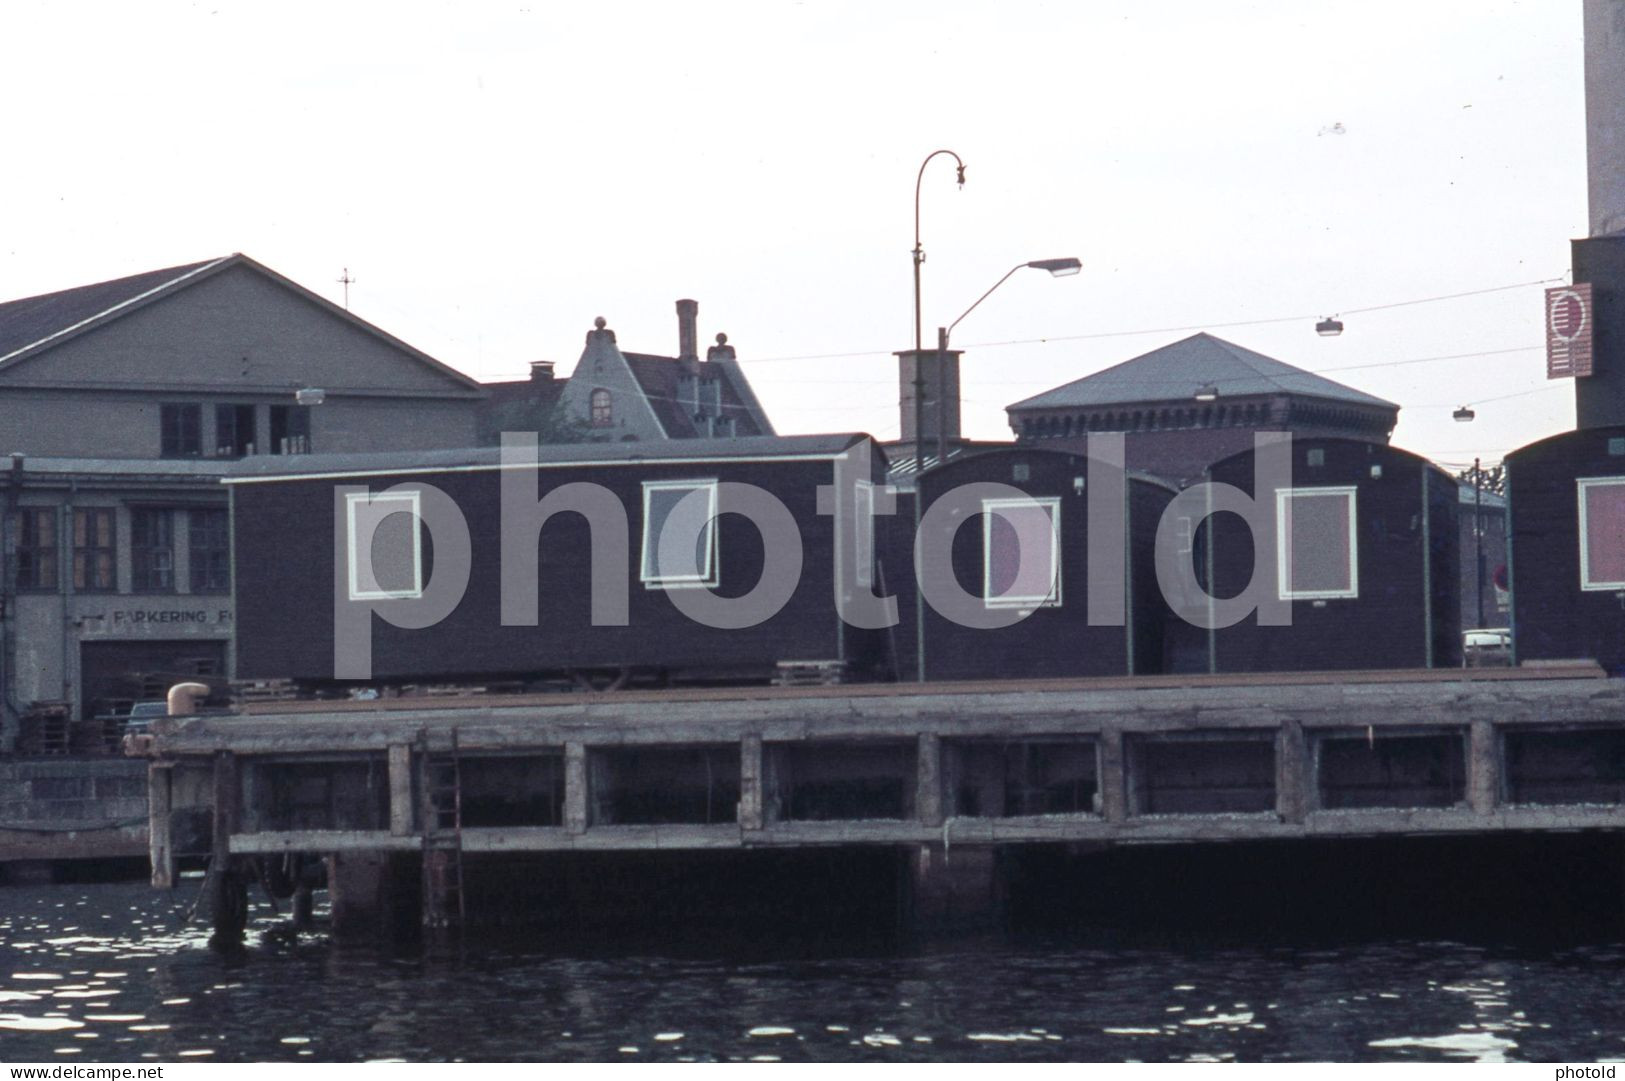 6 SLIDES SET 1977 OSLO NORWAY FJORDER NORGE AMATEUR 35mm SLIDE PHOTO 35mm DIAPOSITIVE SLIDE Not PHOTO No FOTO NB4161 - Diapositives (slides)